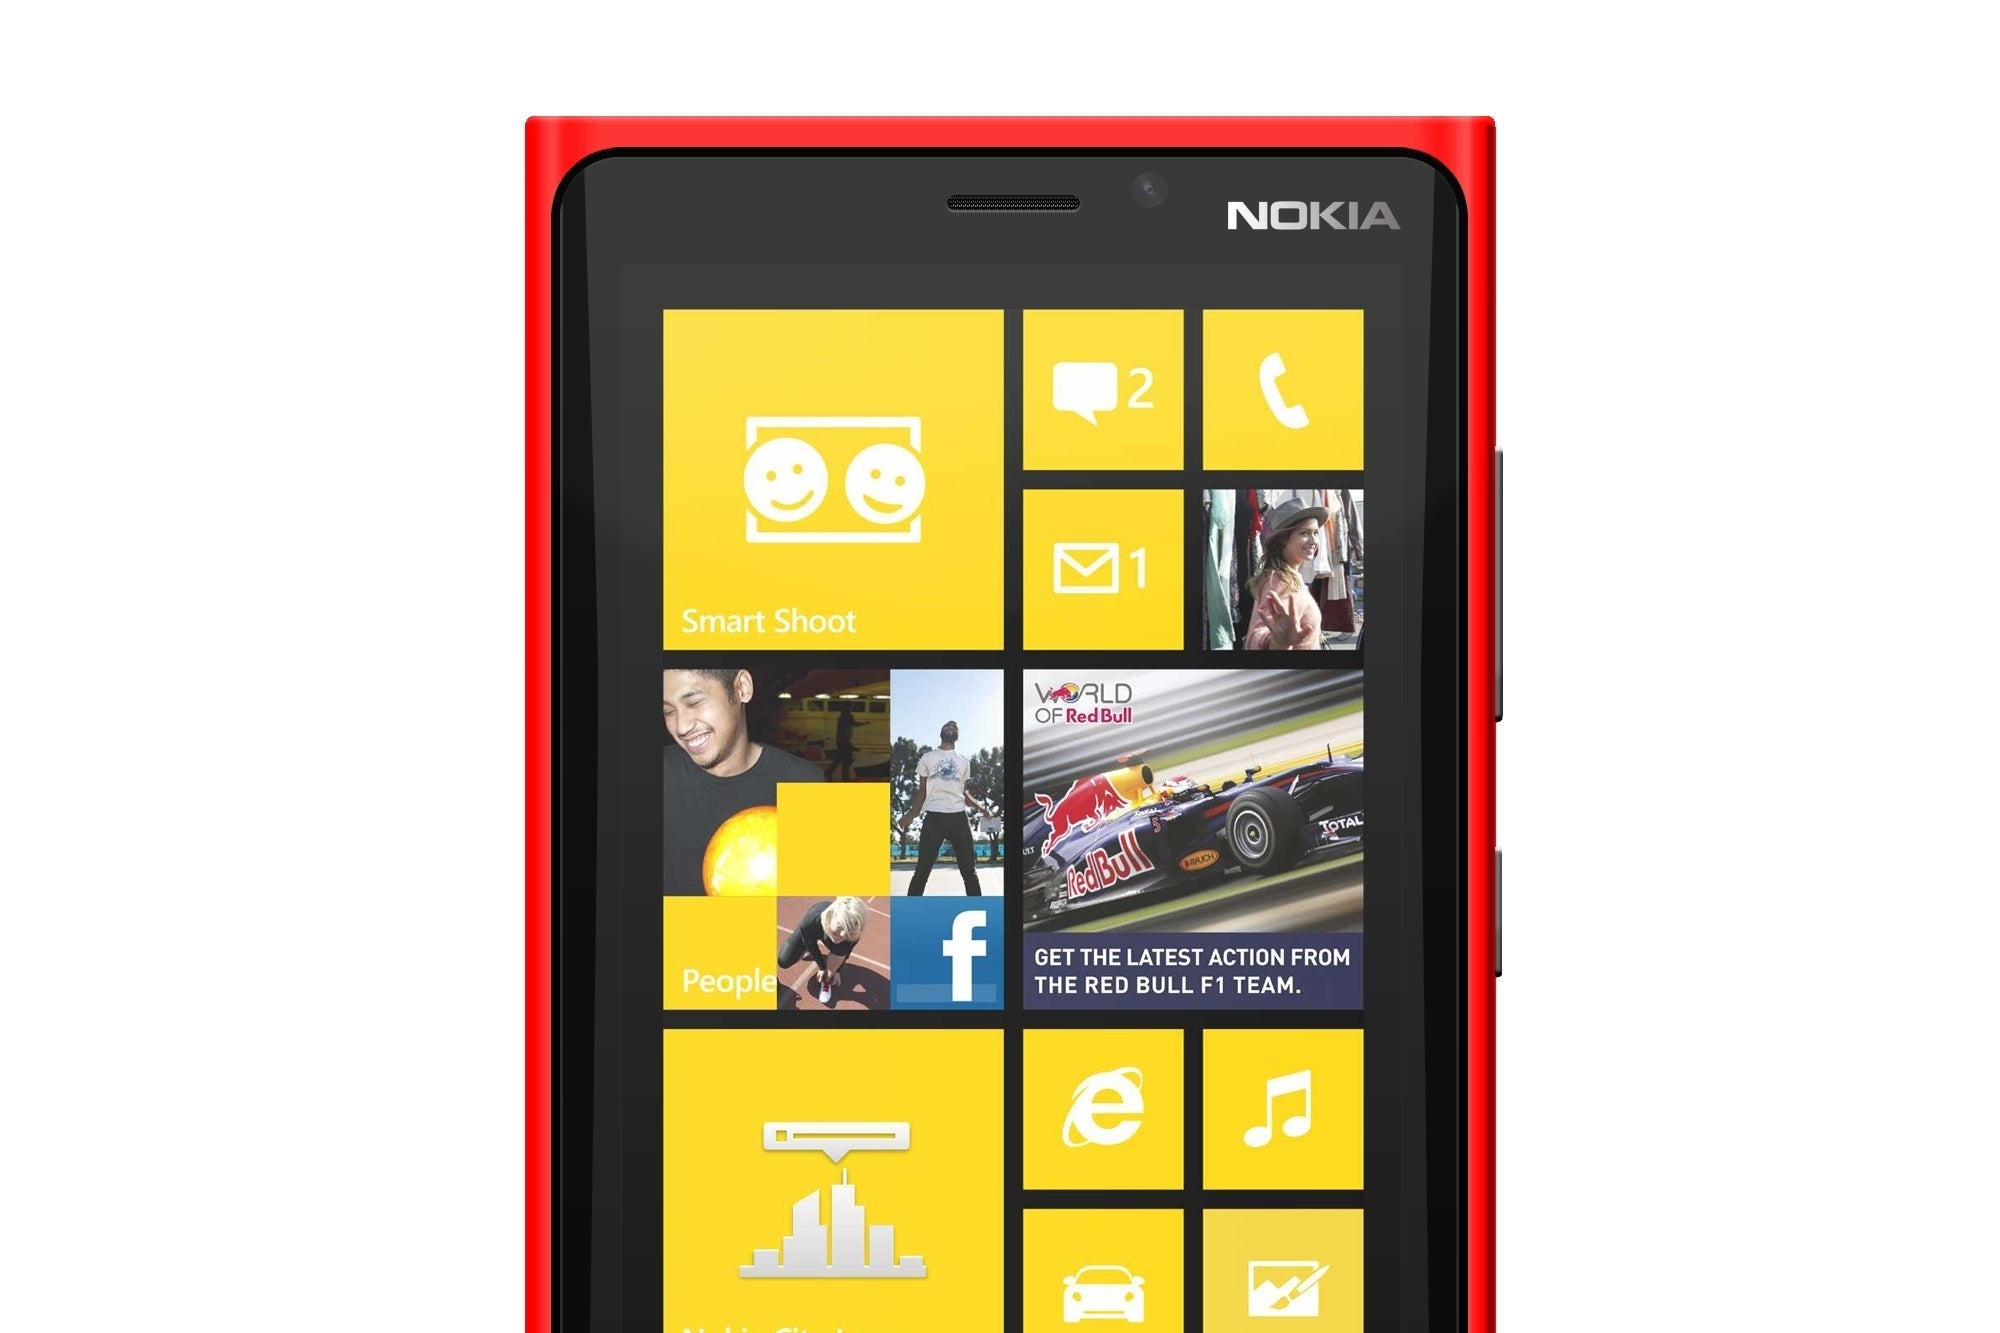 Image for Microsoft buys Nokia handset business for £4.6 billion